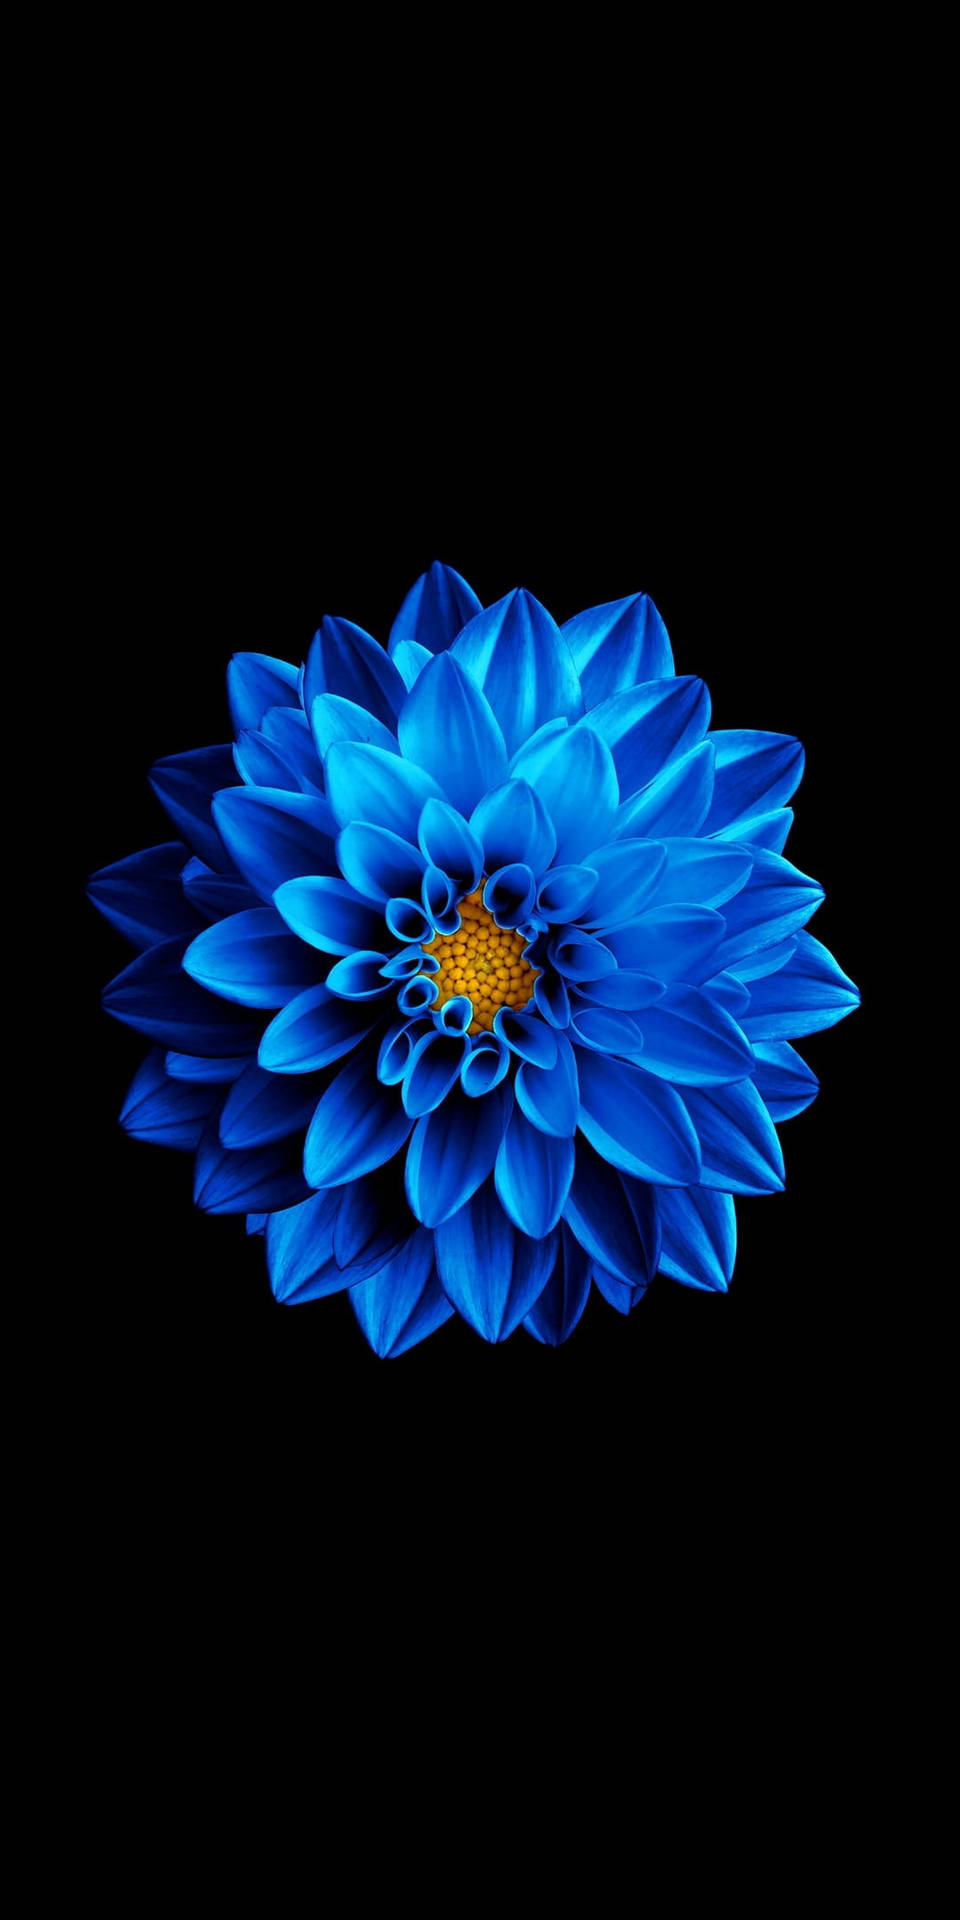 Luminous Blue Flower Oled Phone